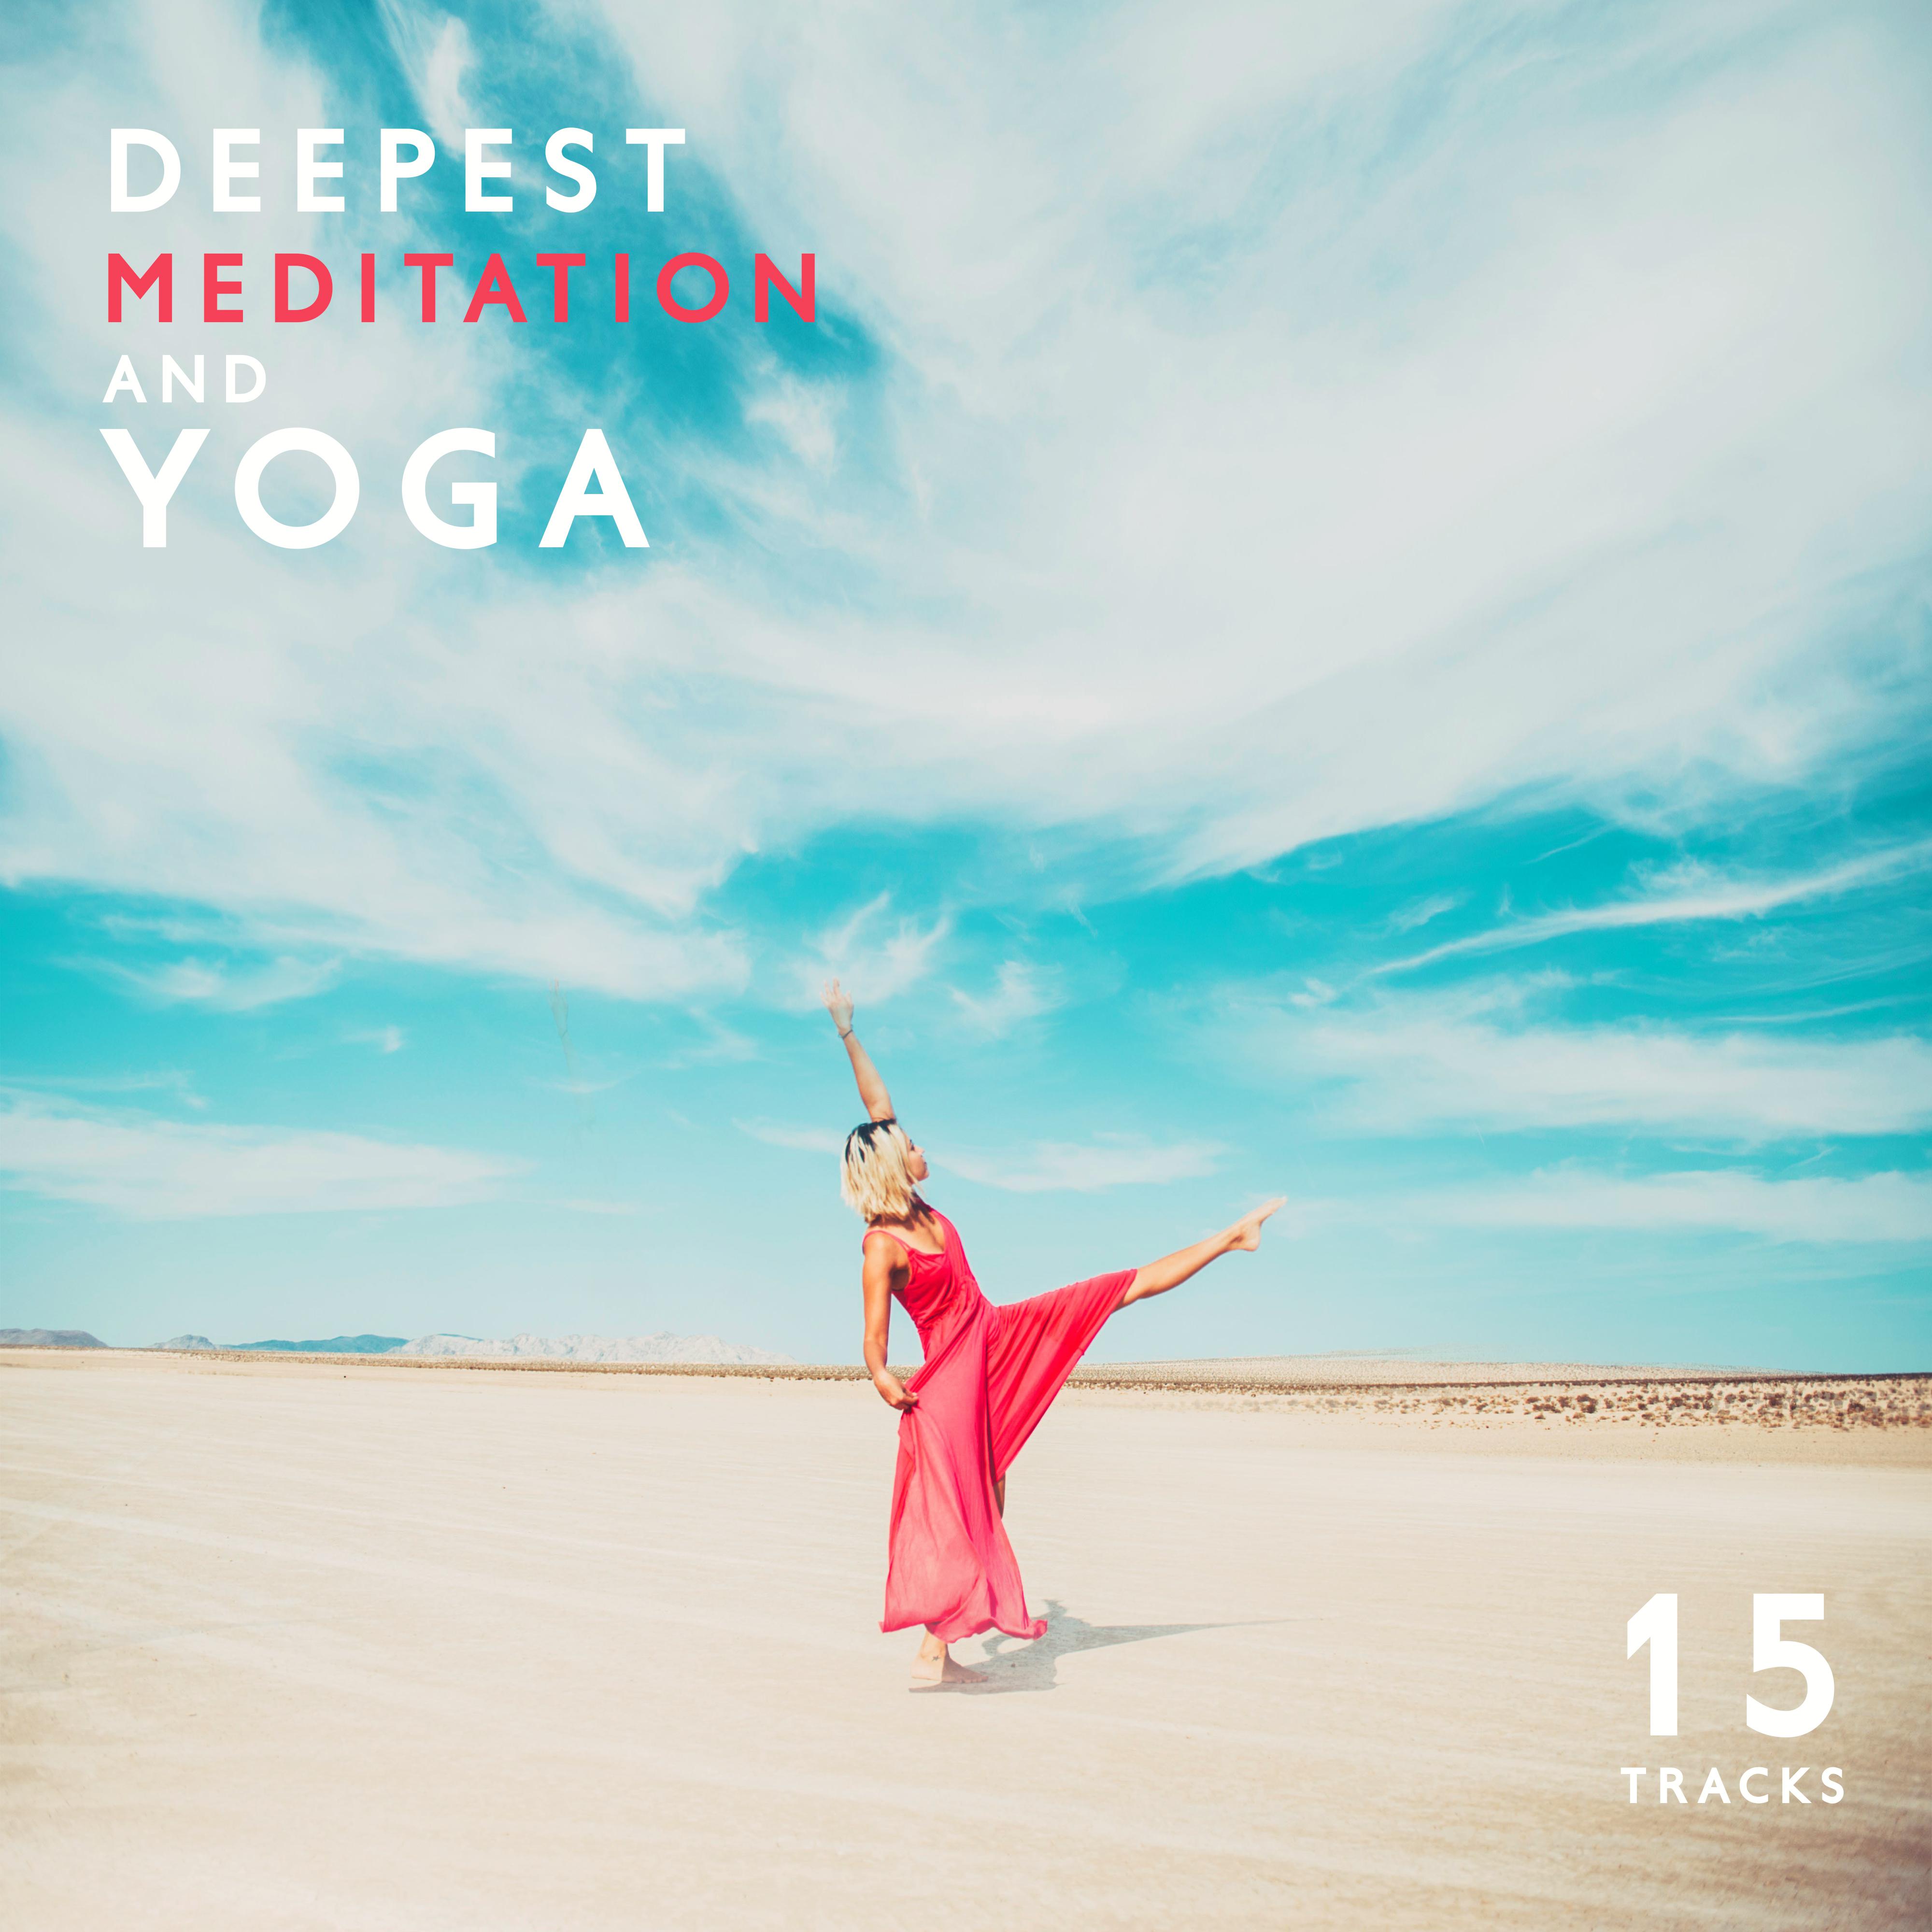 15 Tracks: Deepest Meditation and Yoga (Ascending Yor Spirit and Mind to Highest Level)